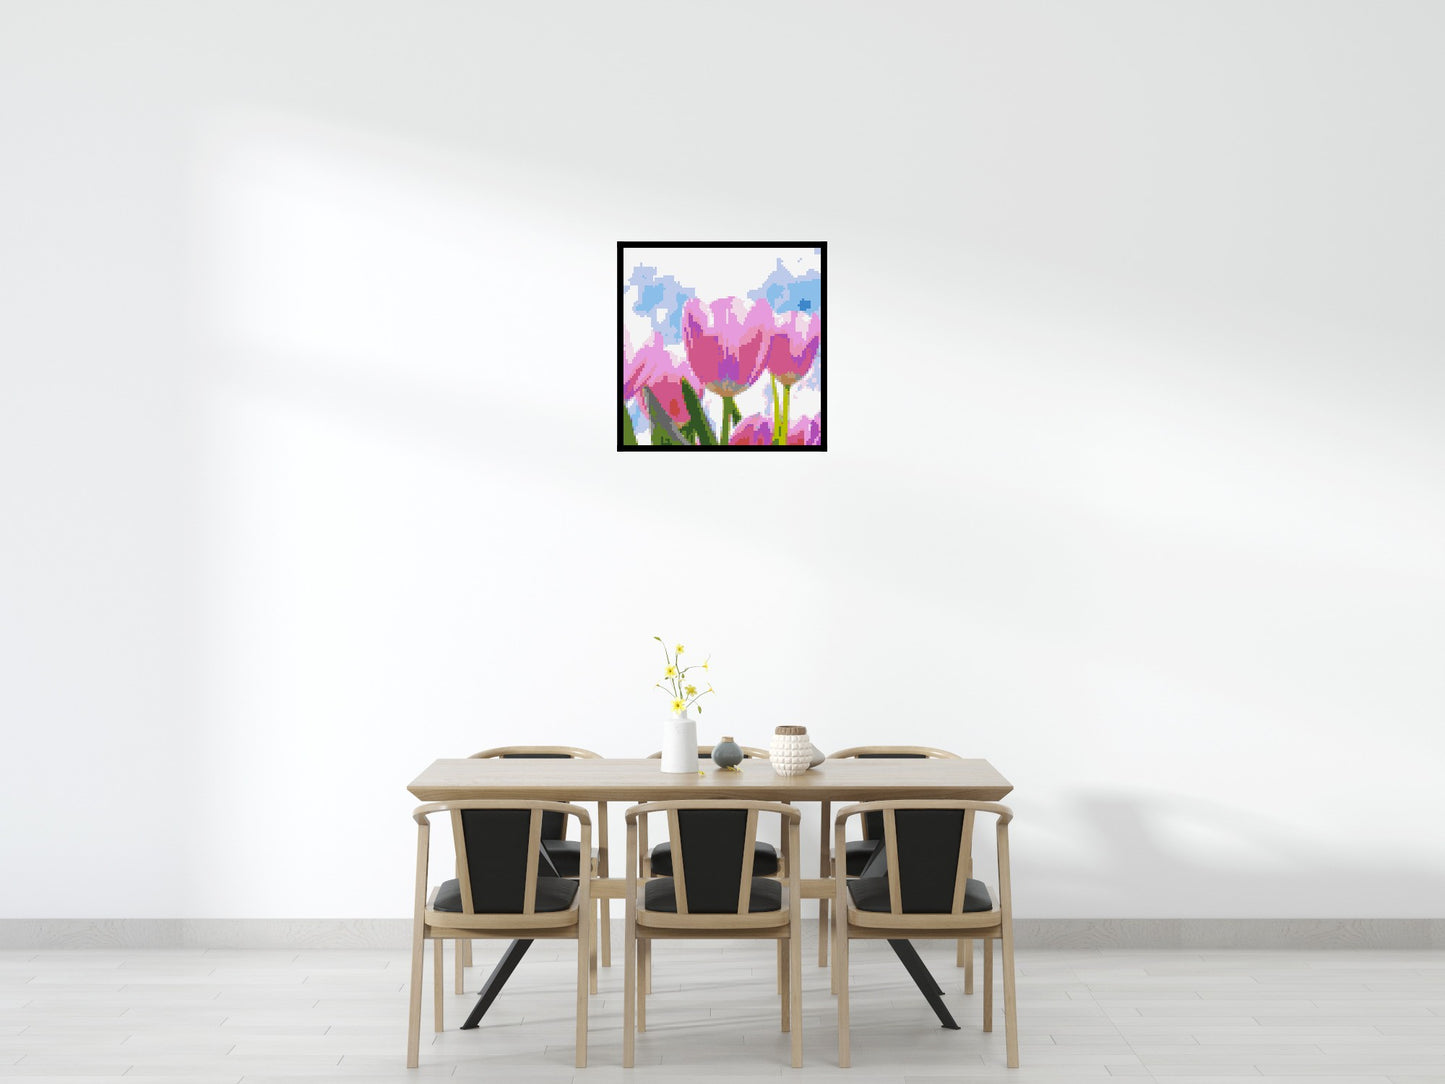 Pink Tulips - Brick Art Mosaic Kit 4x4 large